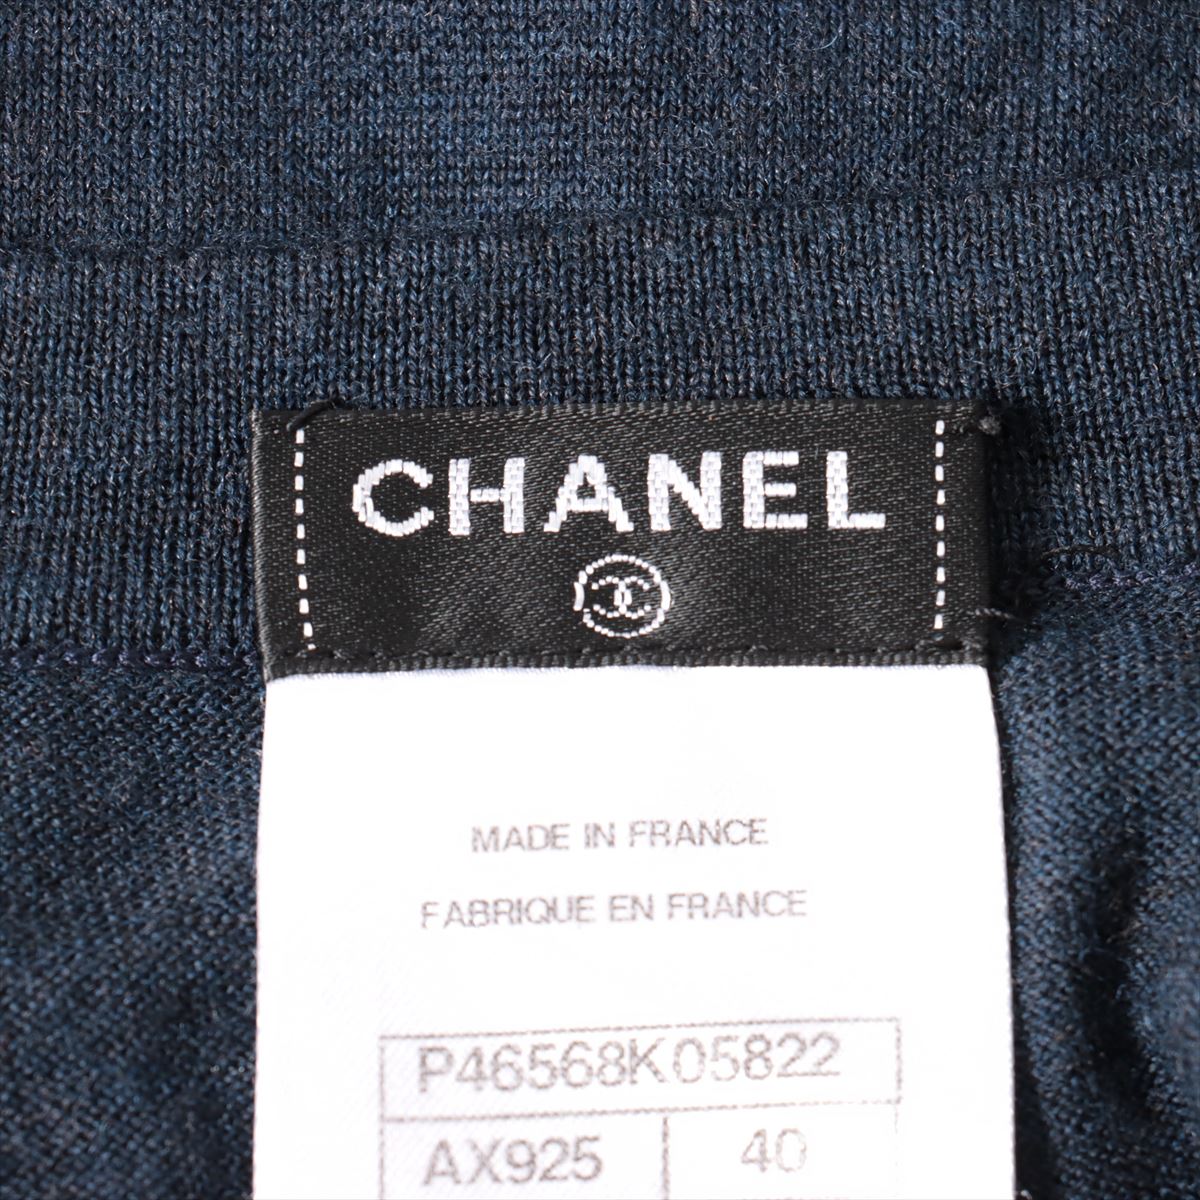 Chanel Wool Dress 40 Ladies' Navy blue  Coco mark emblem patch P46568K05822